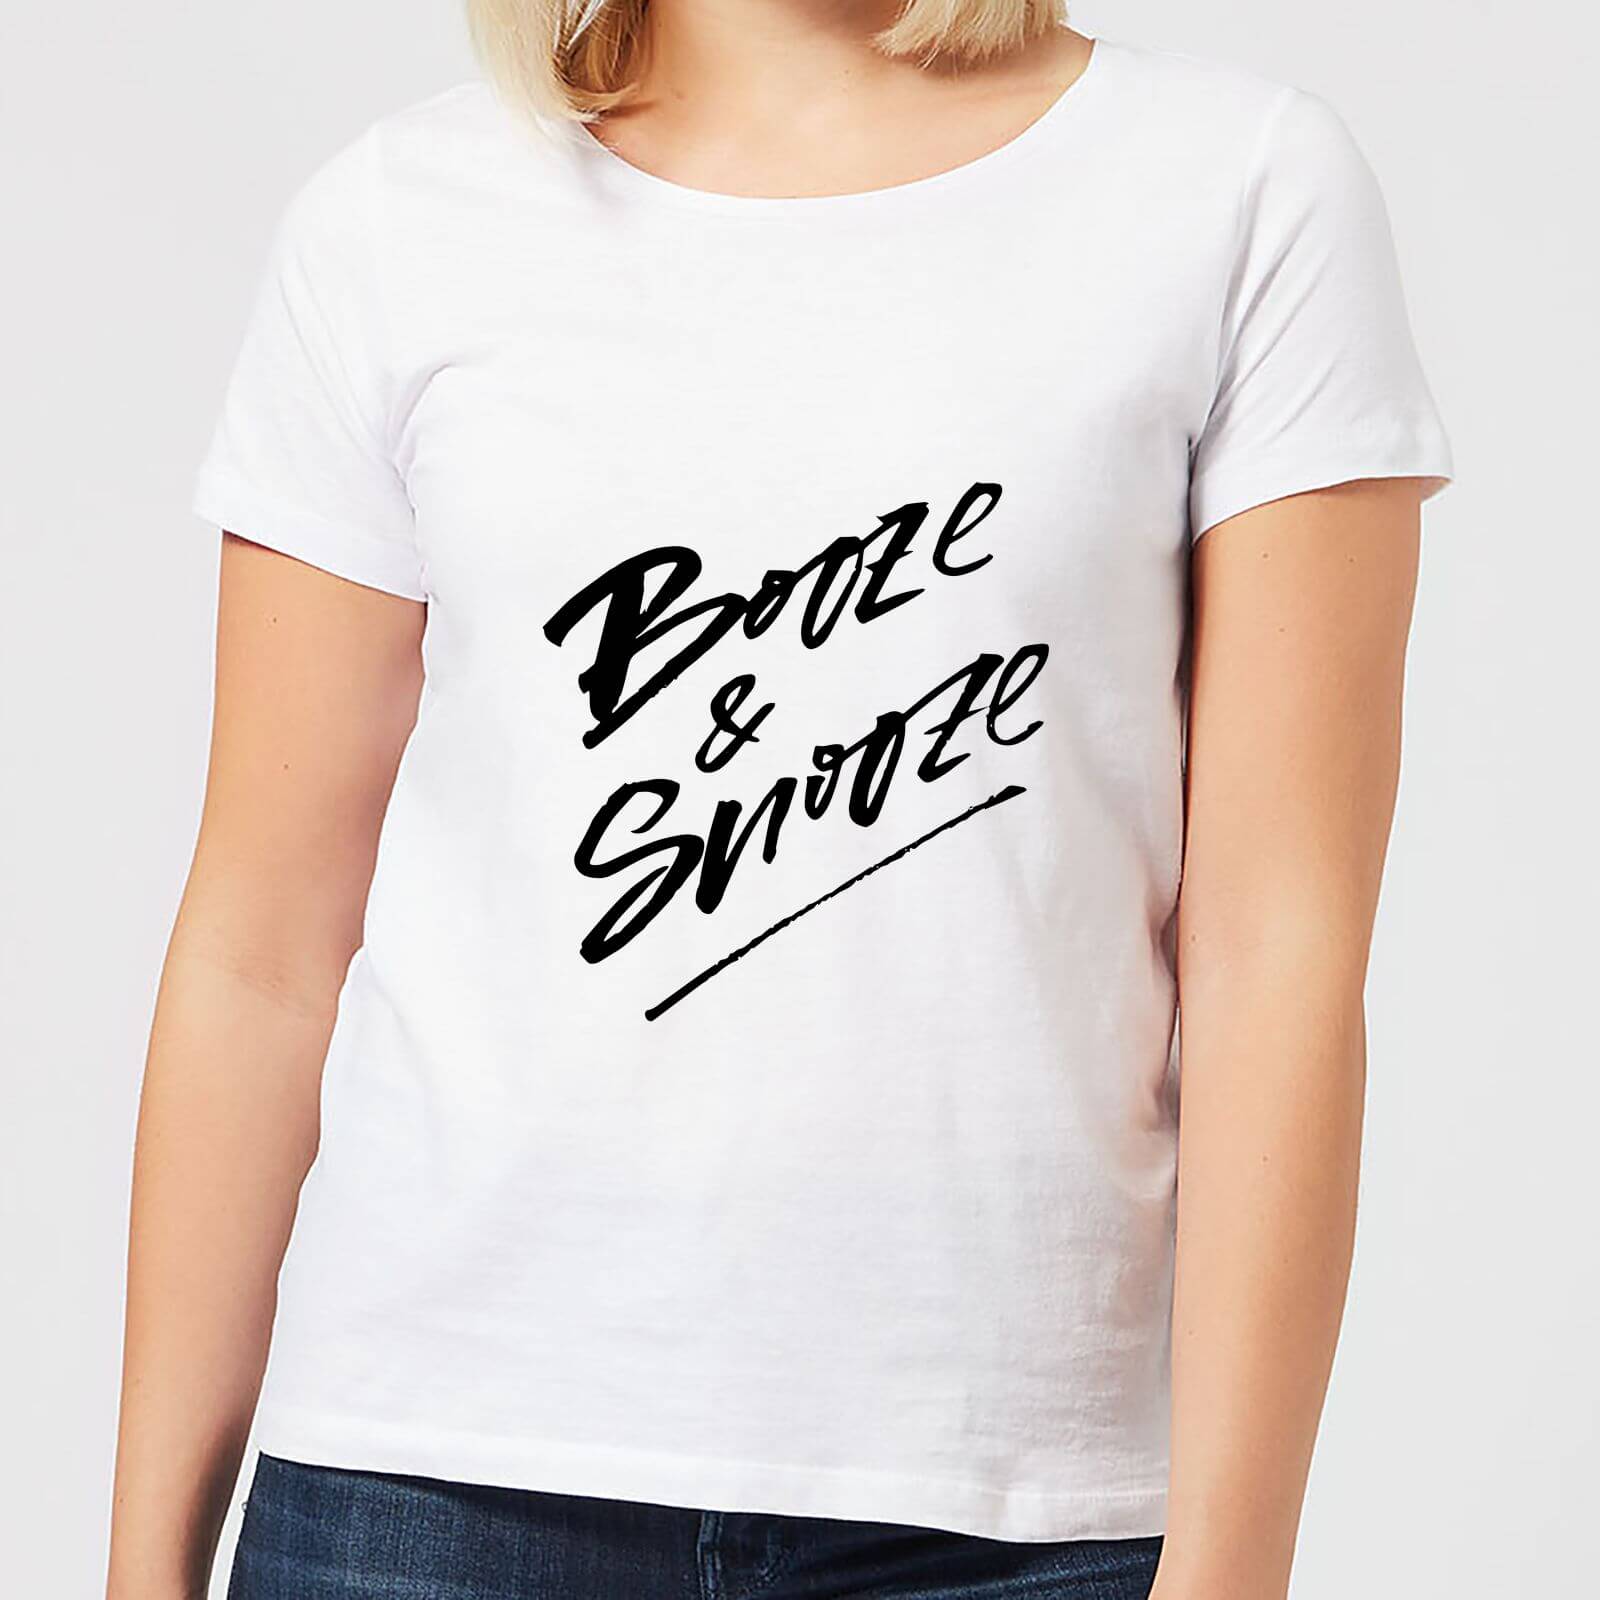 Booze & Snooze Women's T-Shirt - White - S - White